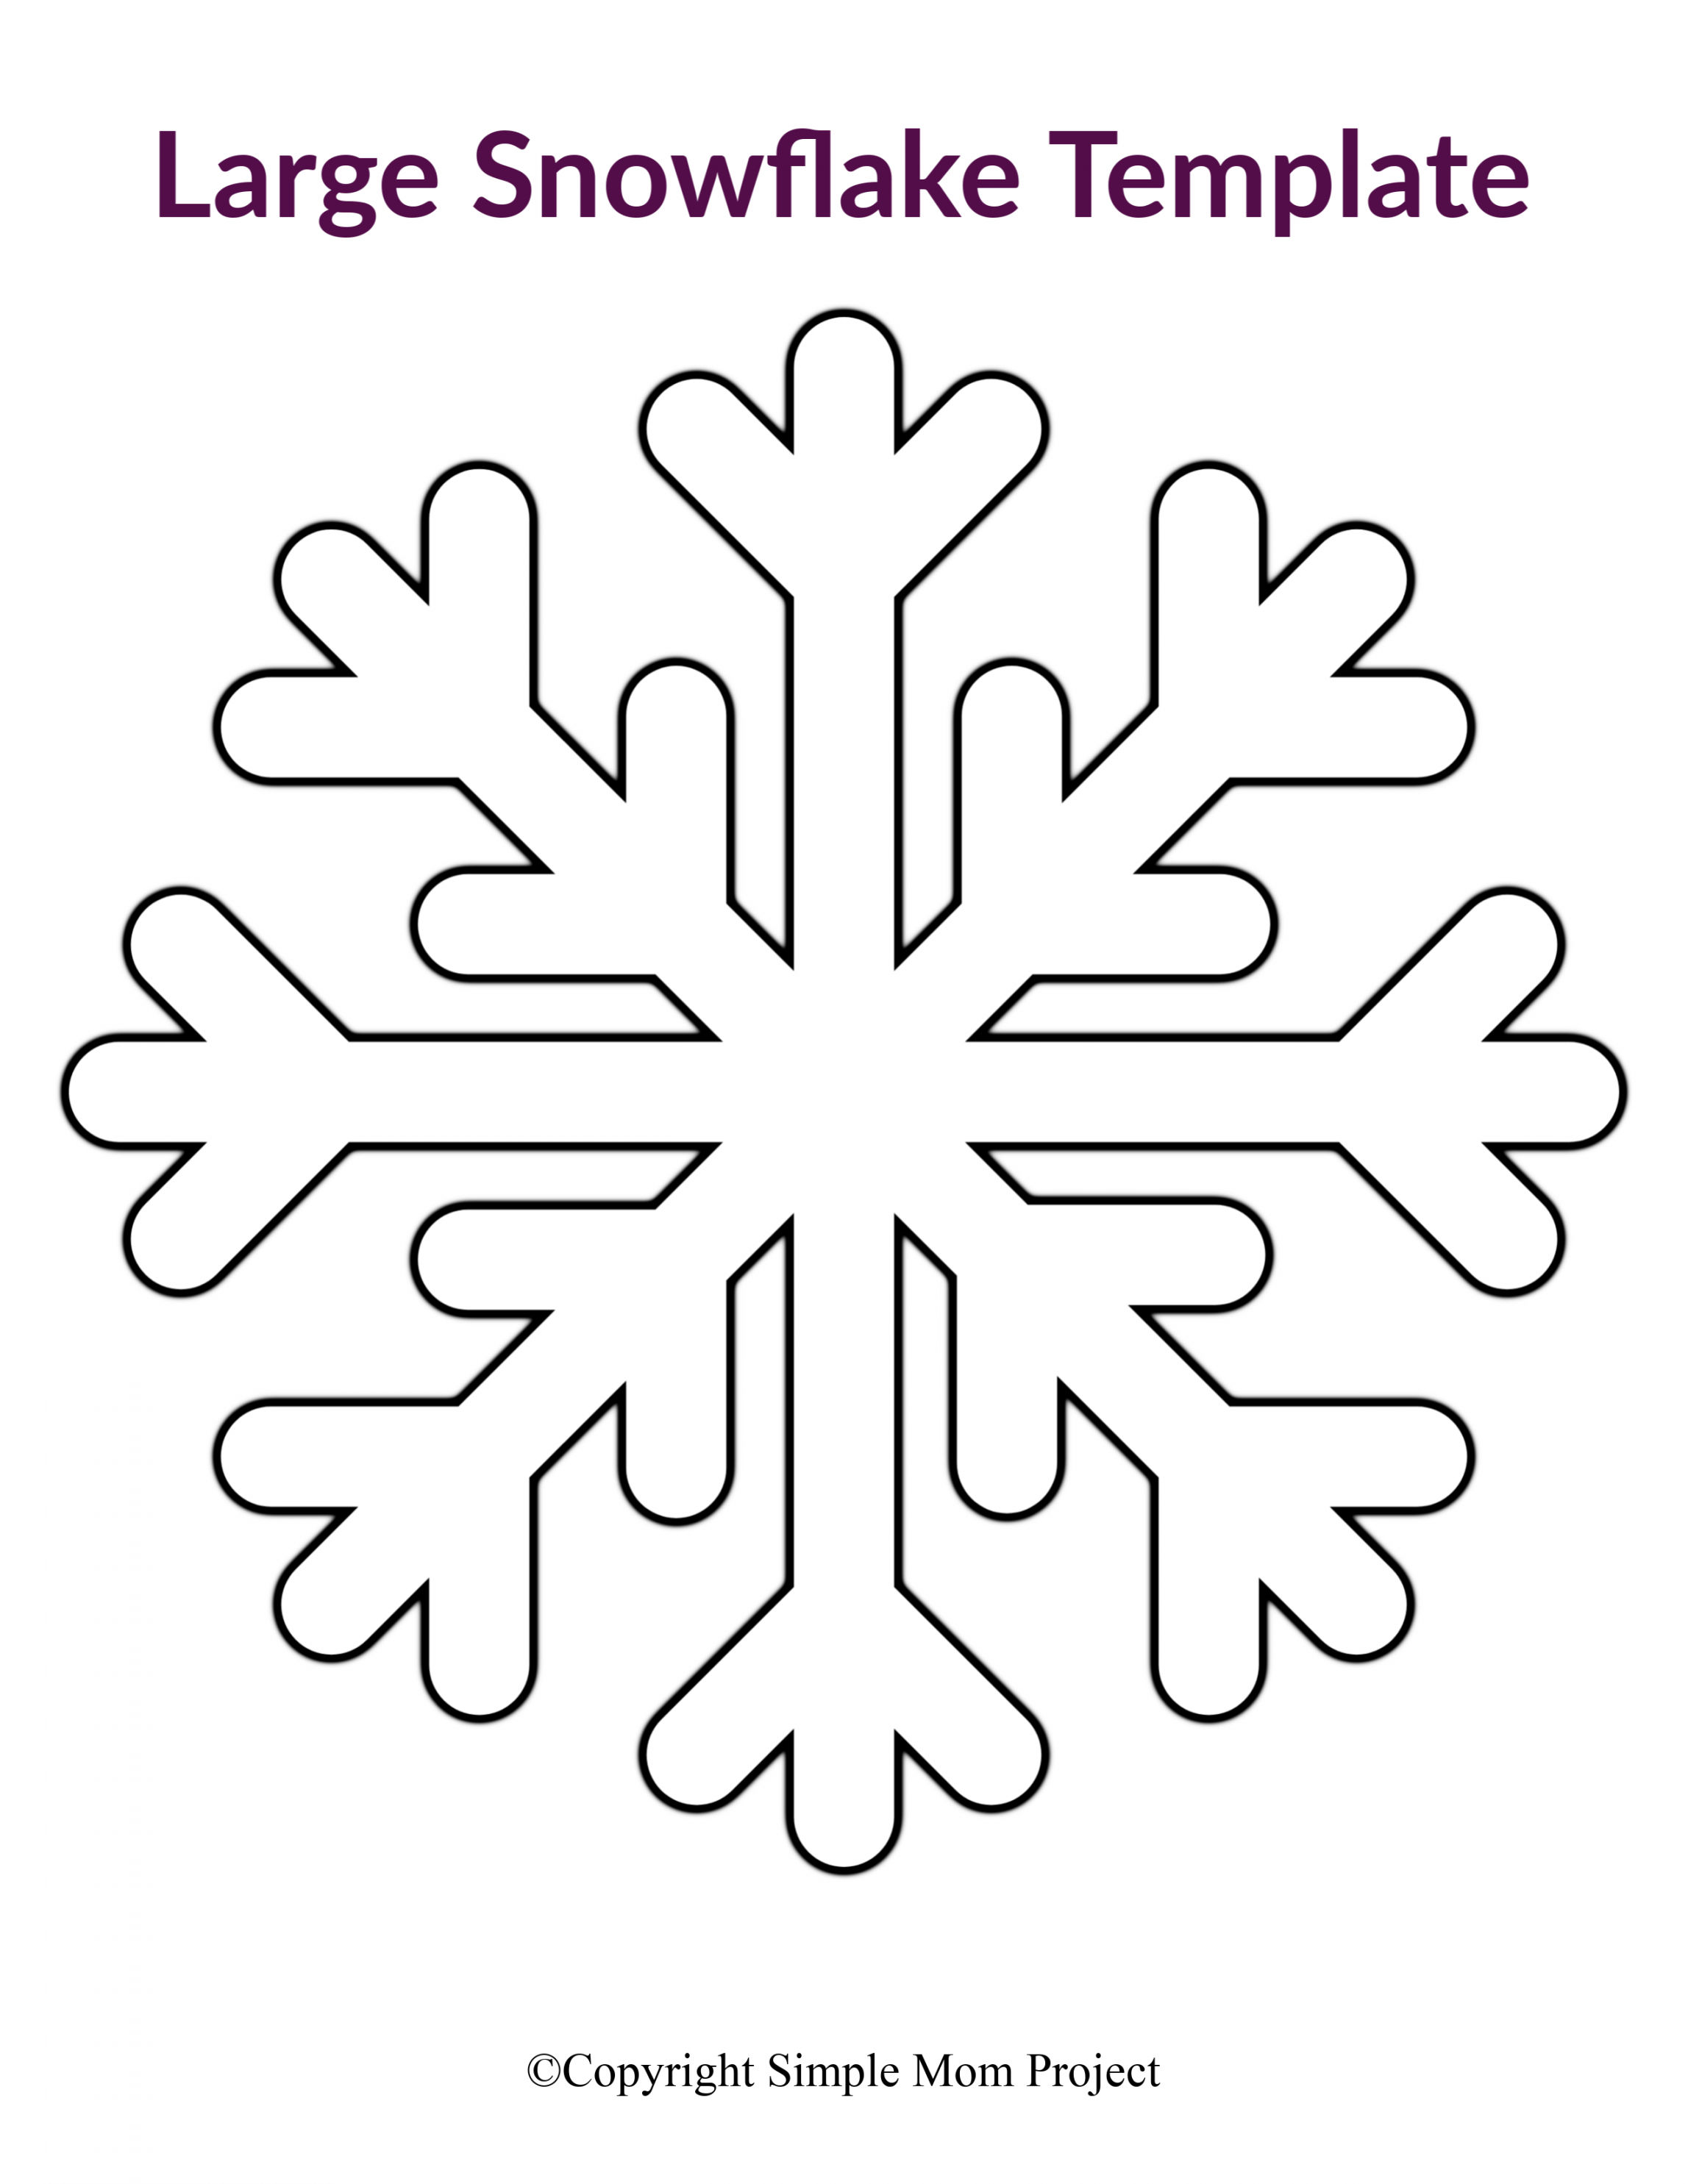 Free Printable Large Snowflake Templates - Simple Mom Project - FREE Printables - Printable Snowflakes